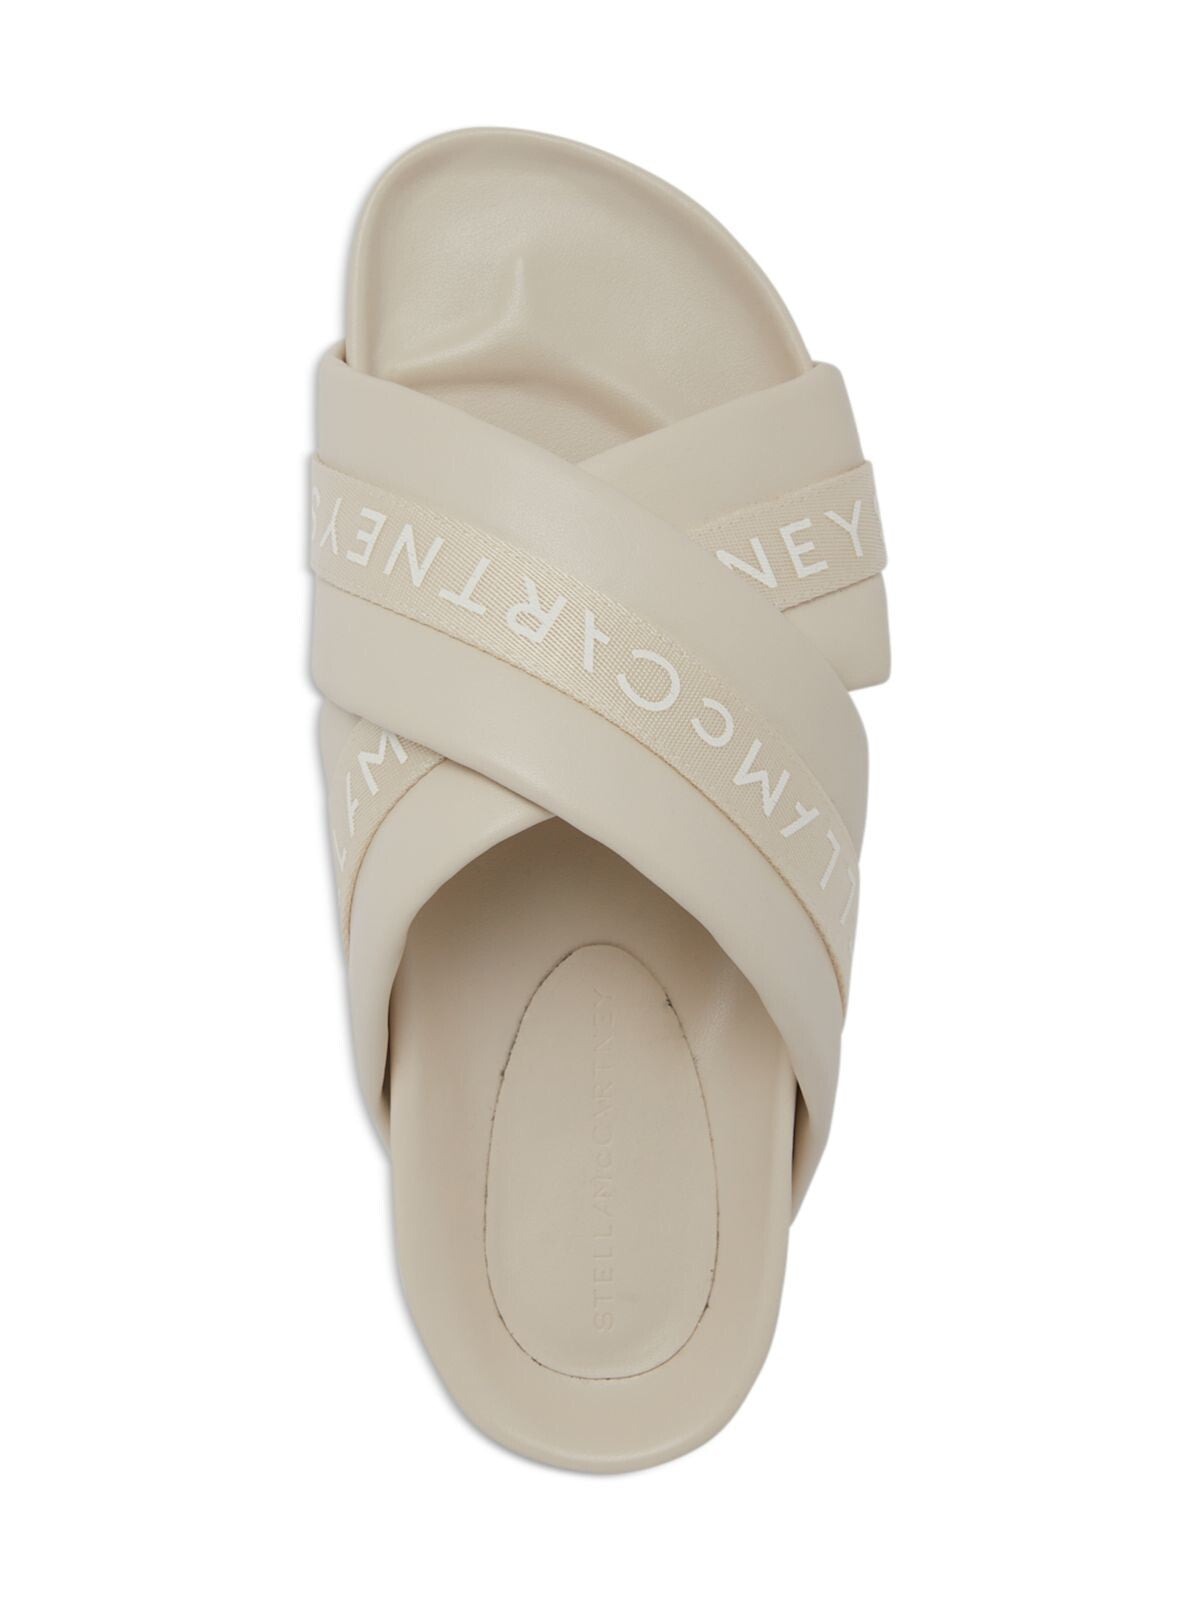 STELLAMCCARTNEY Womens Beige Logo Comfort Vesta Round Toe Platform Slip On Slide Sandals Shoes